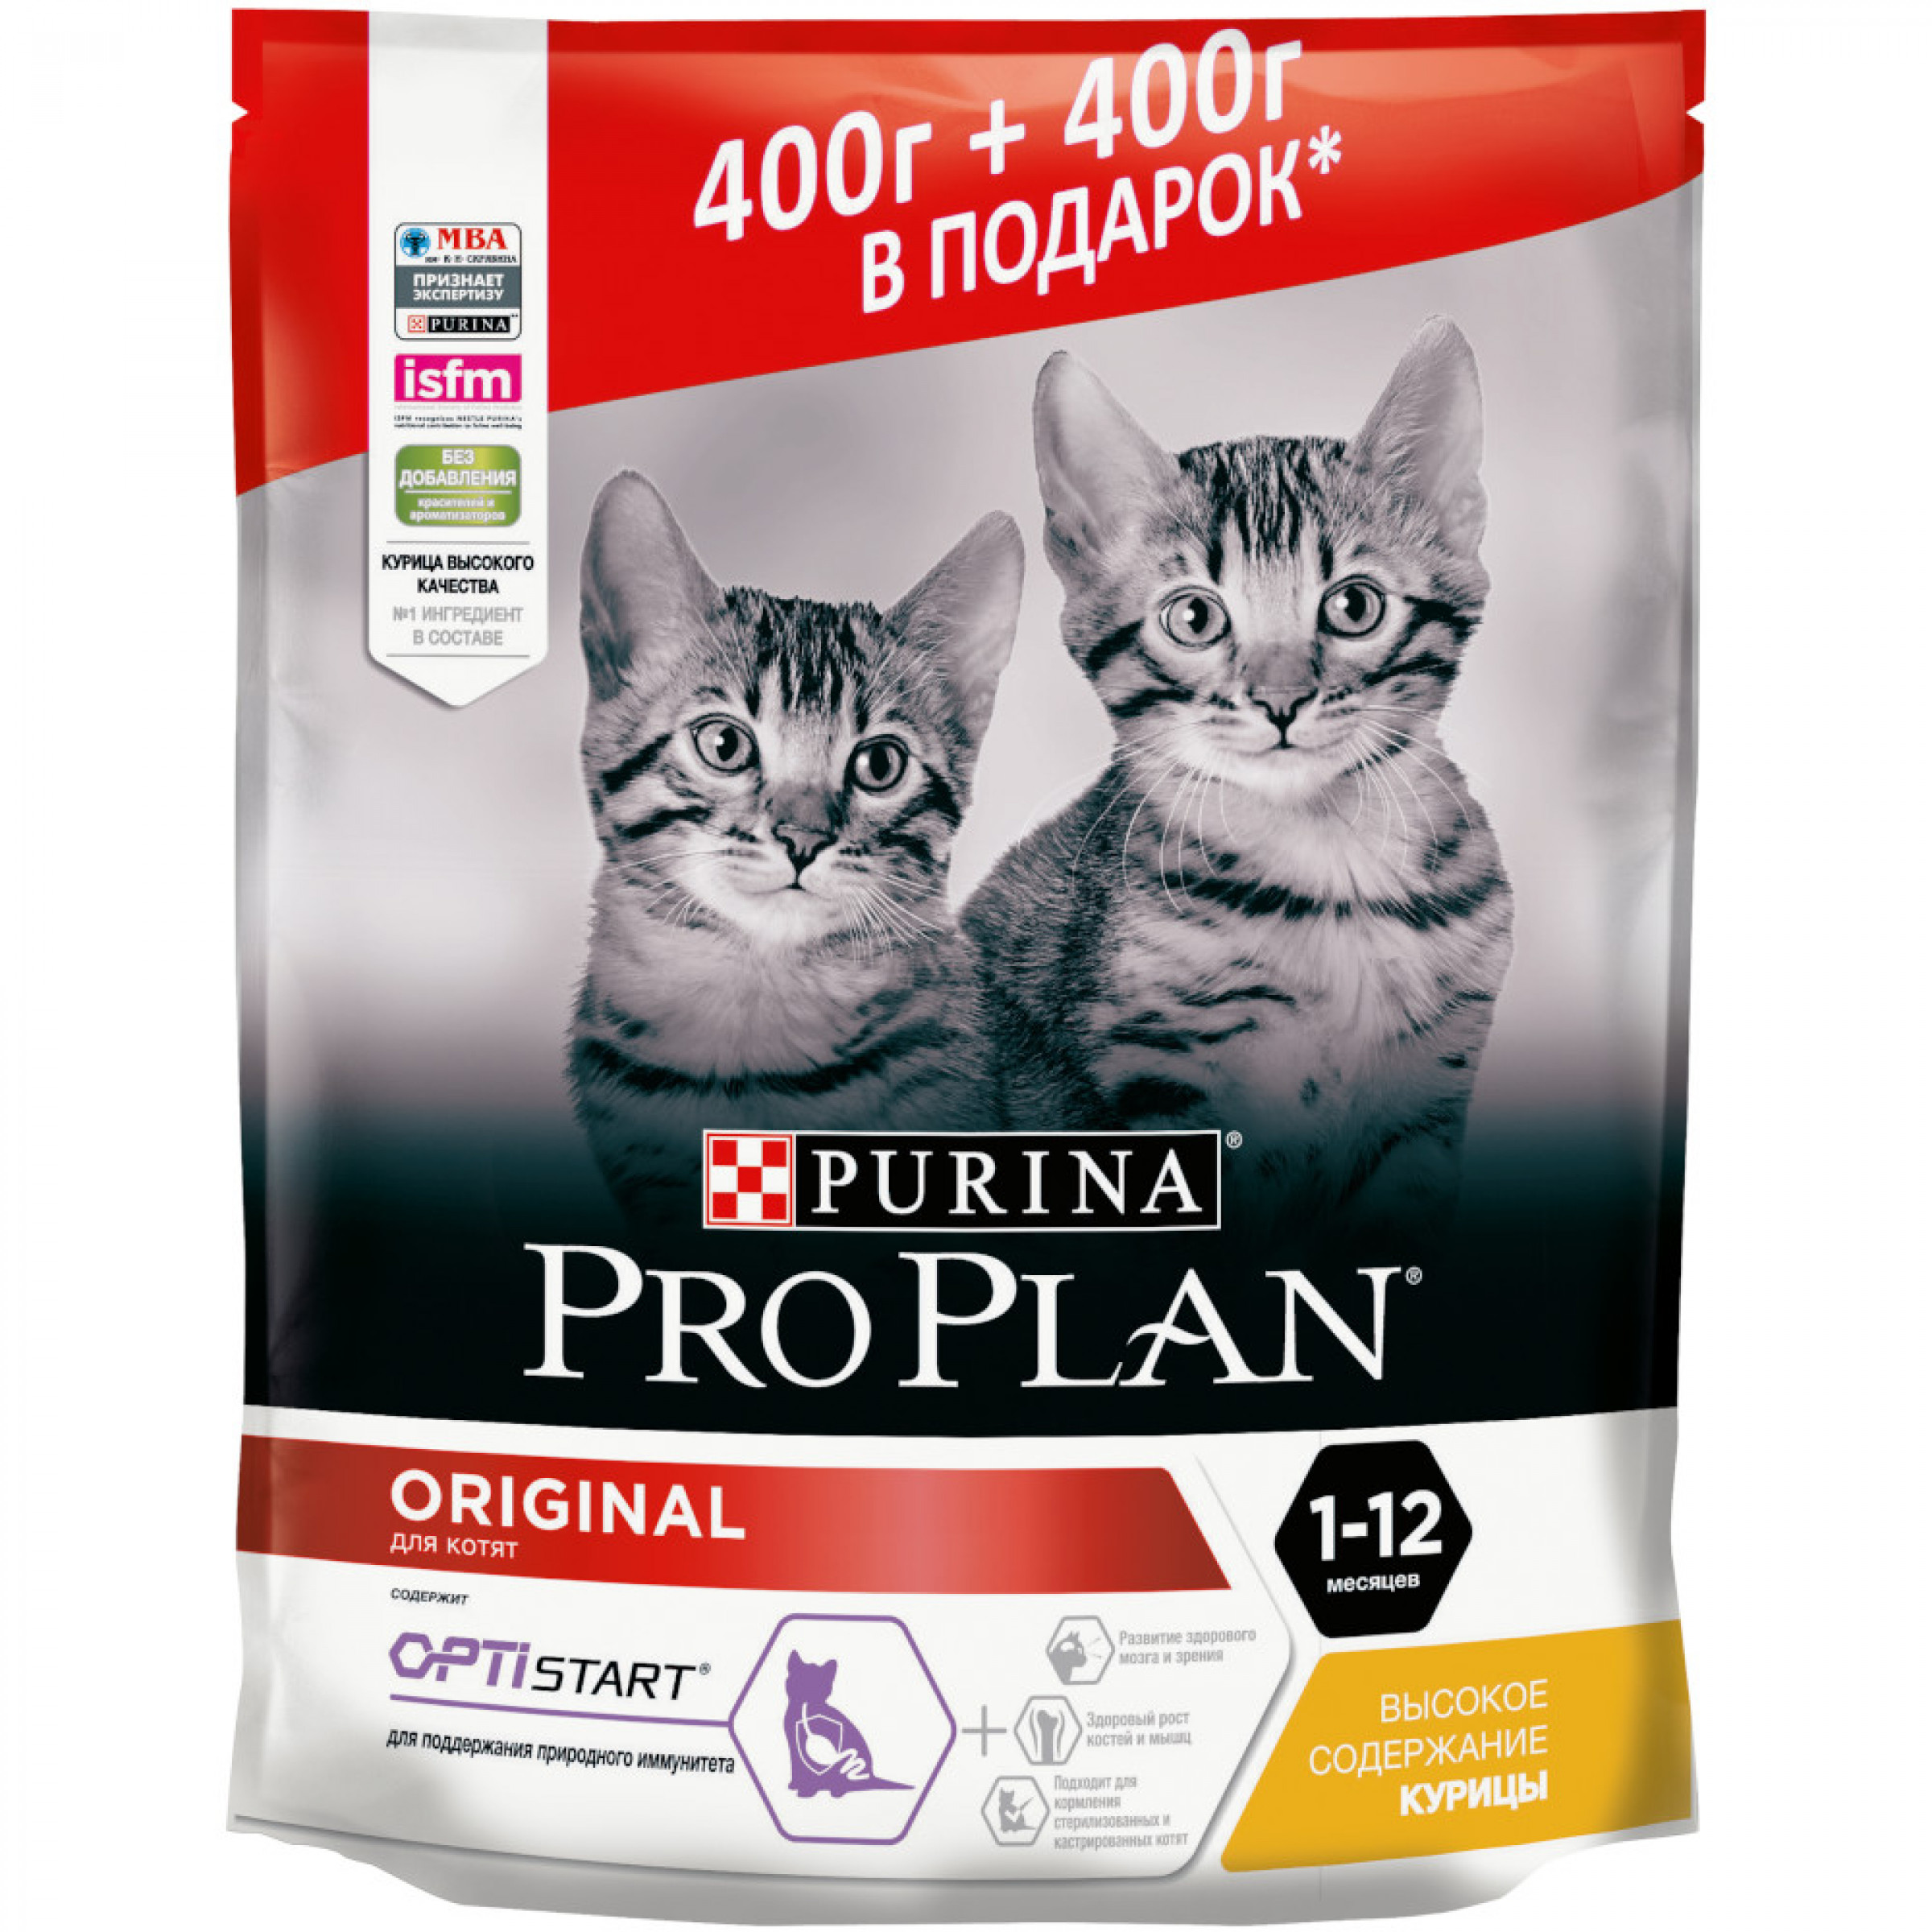 Сухой корм Purina Pro Plan для котят от 1 до 12 месяцев с курицей, 400 гр + 400 гр в подарок